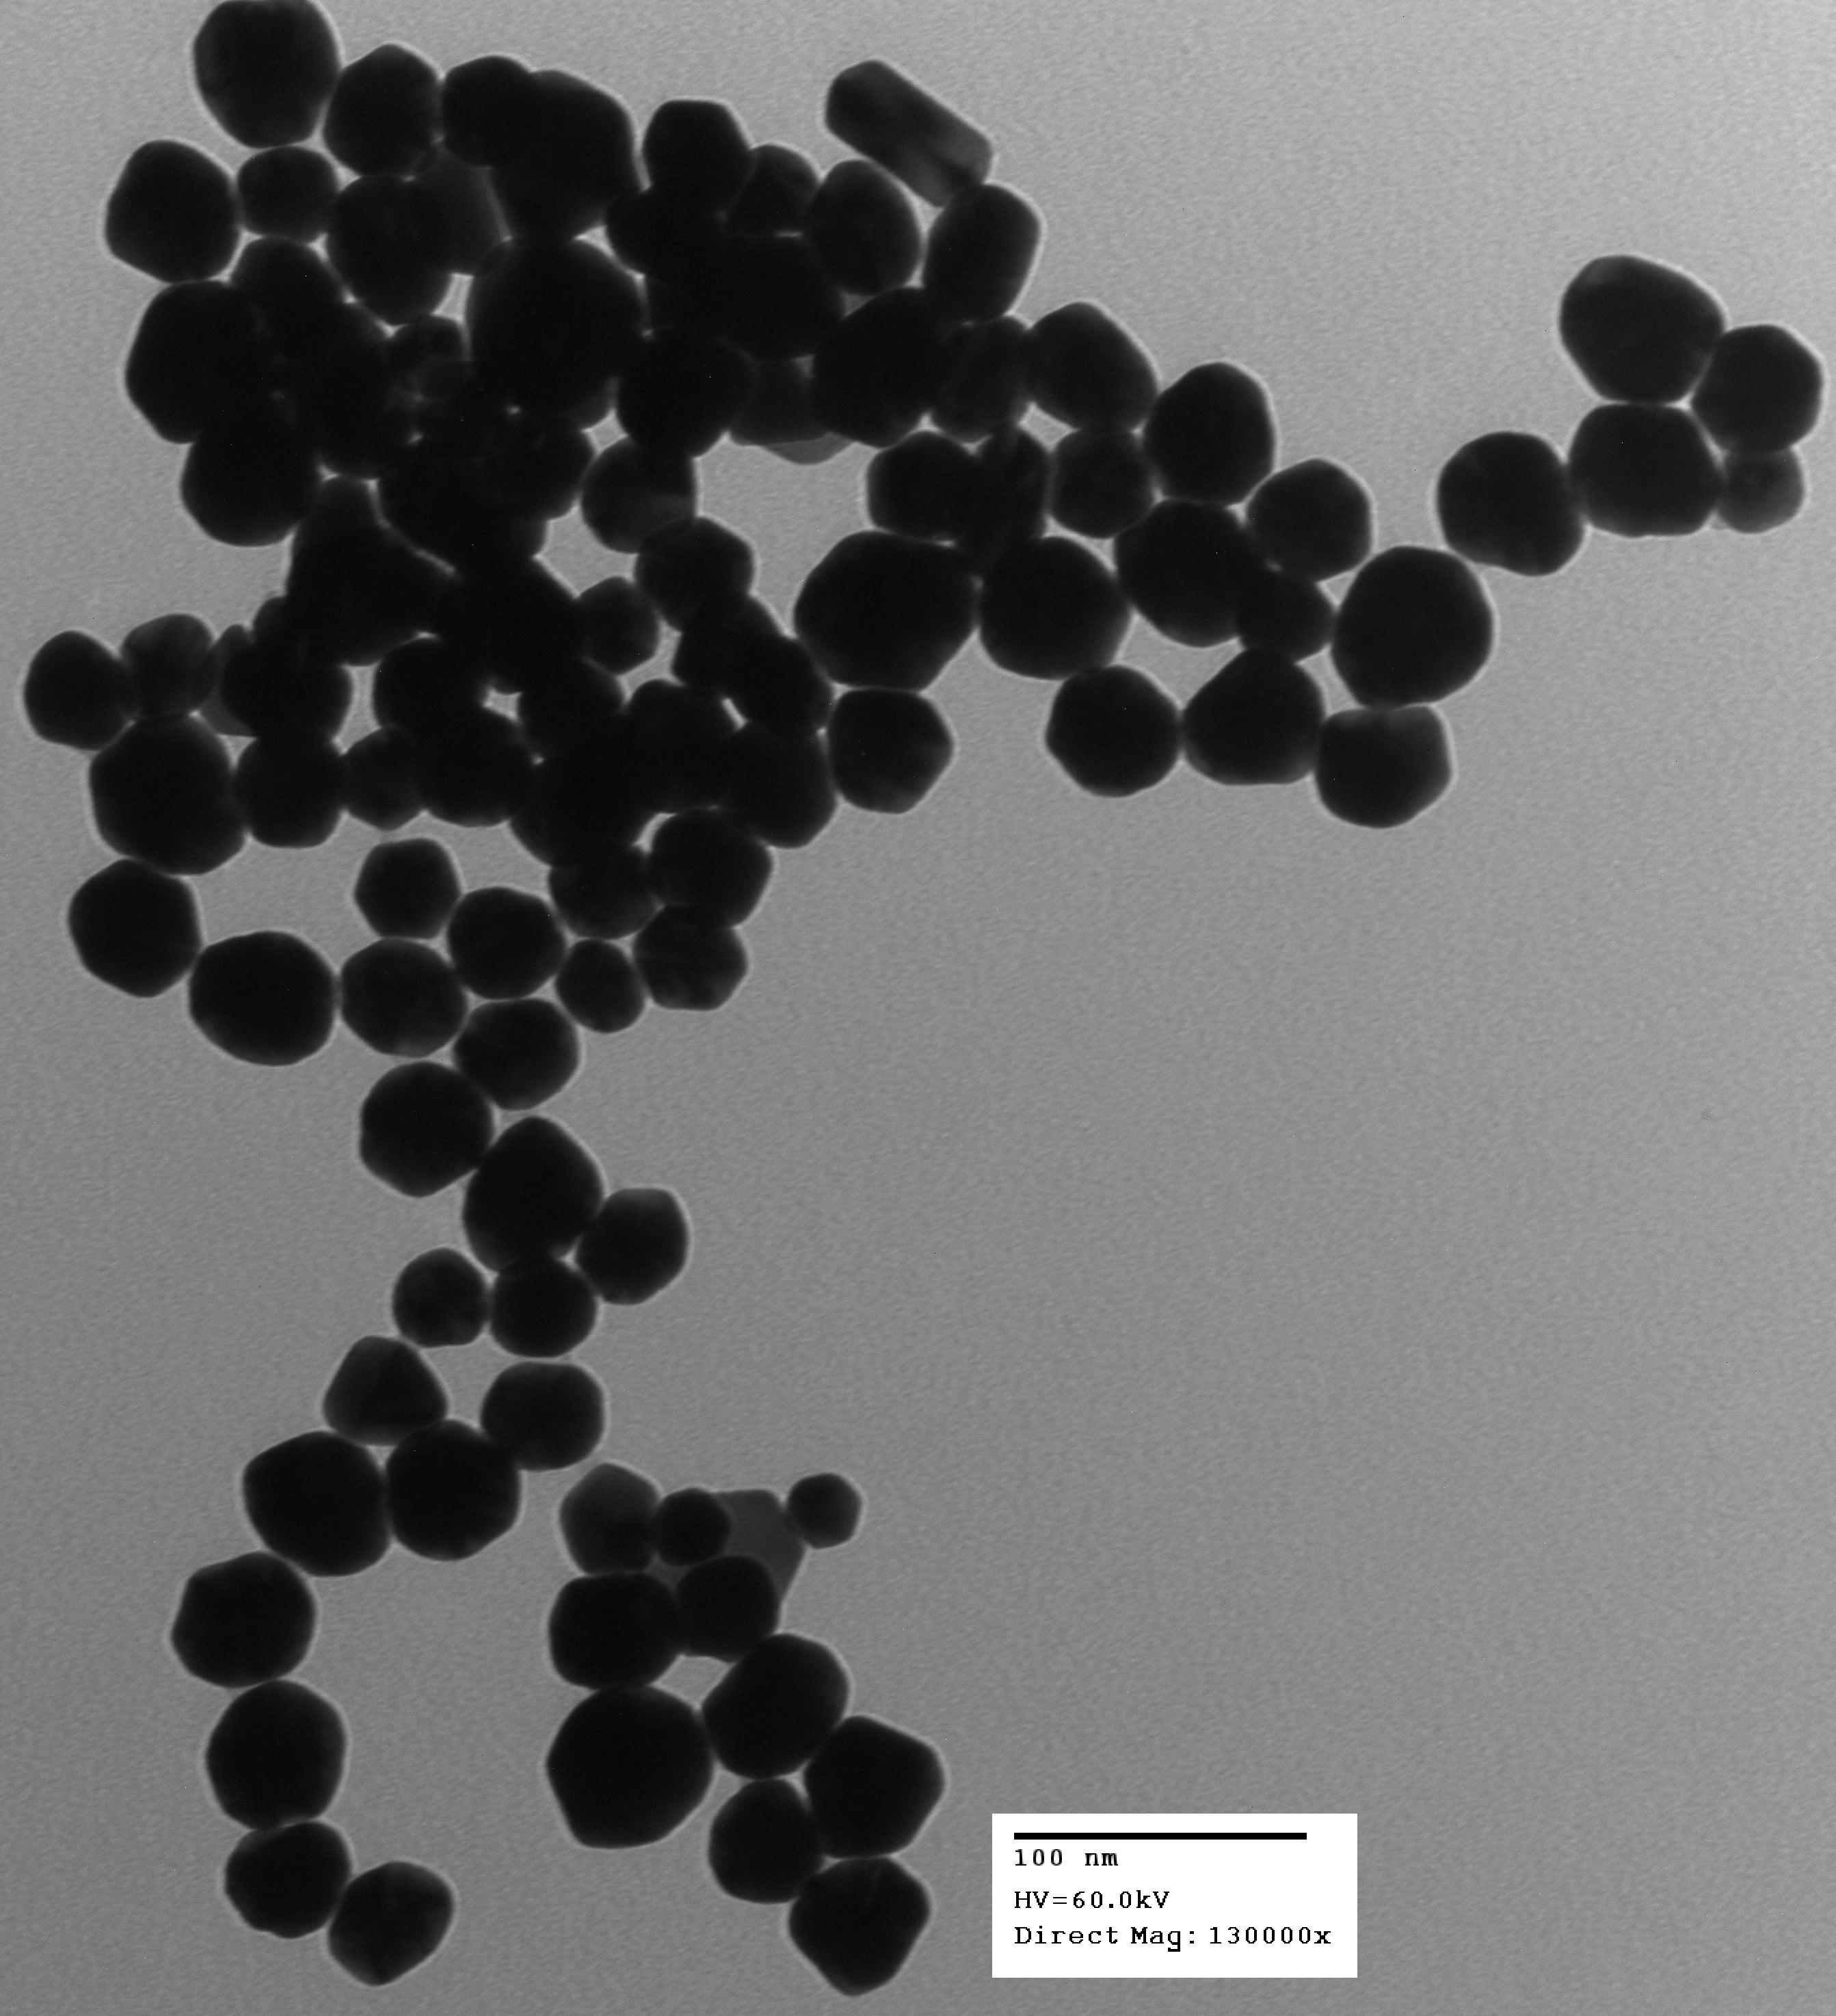 cucurmin loaded gold nanoparticles at 100 nm scale